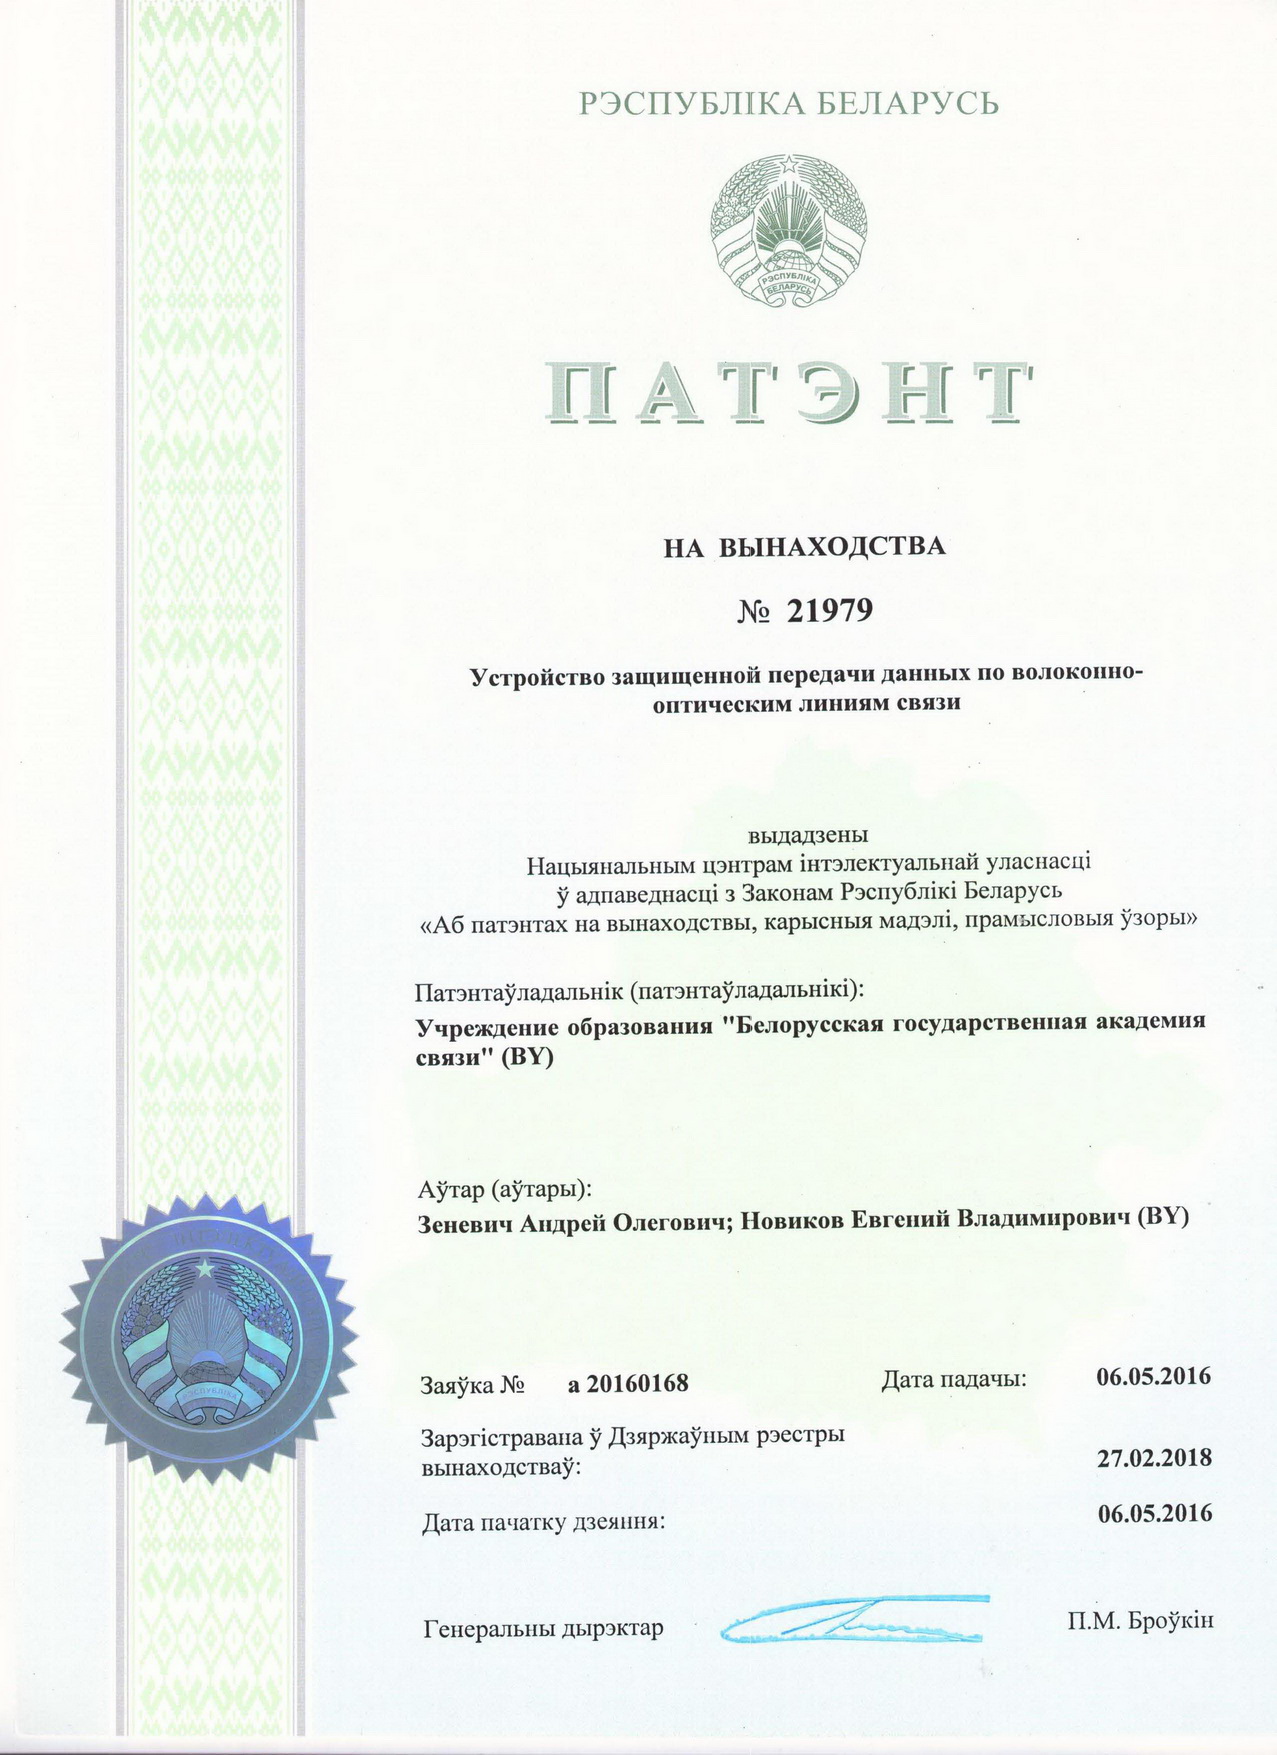 document_patent_21979.jpg